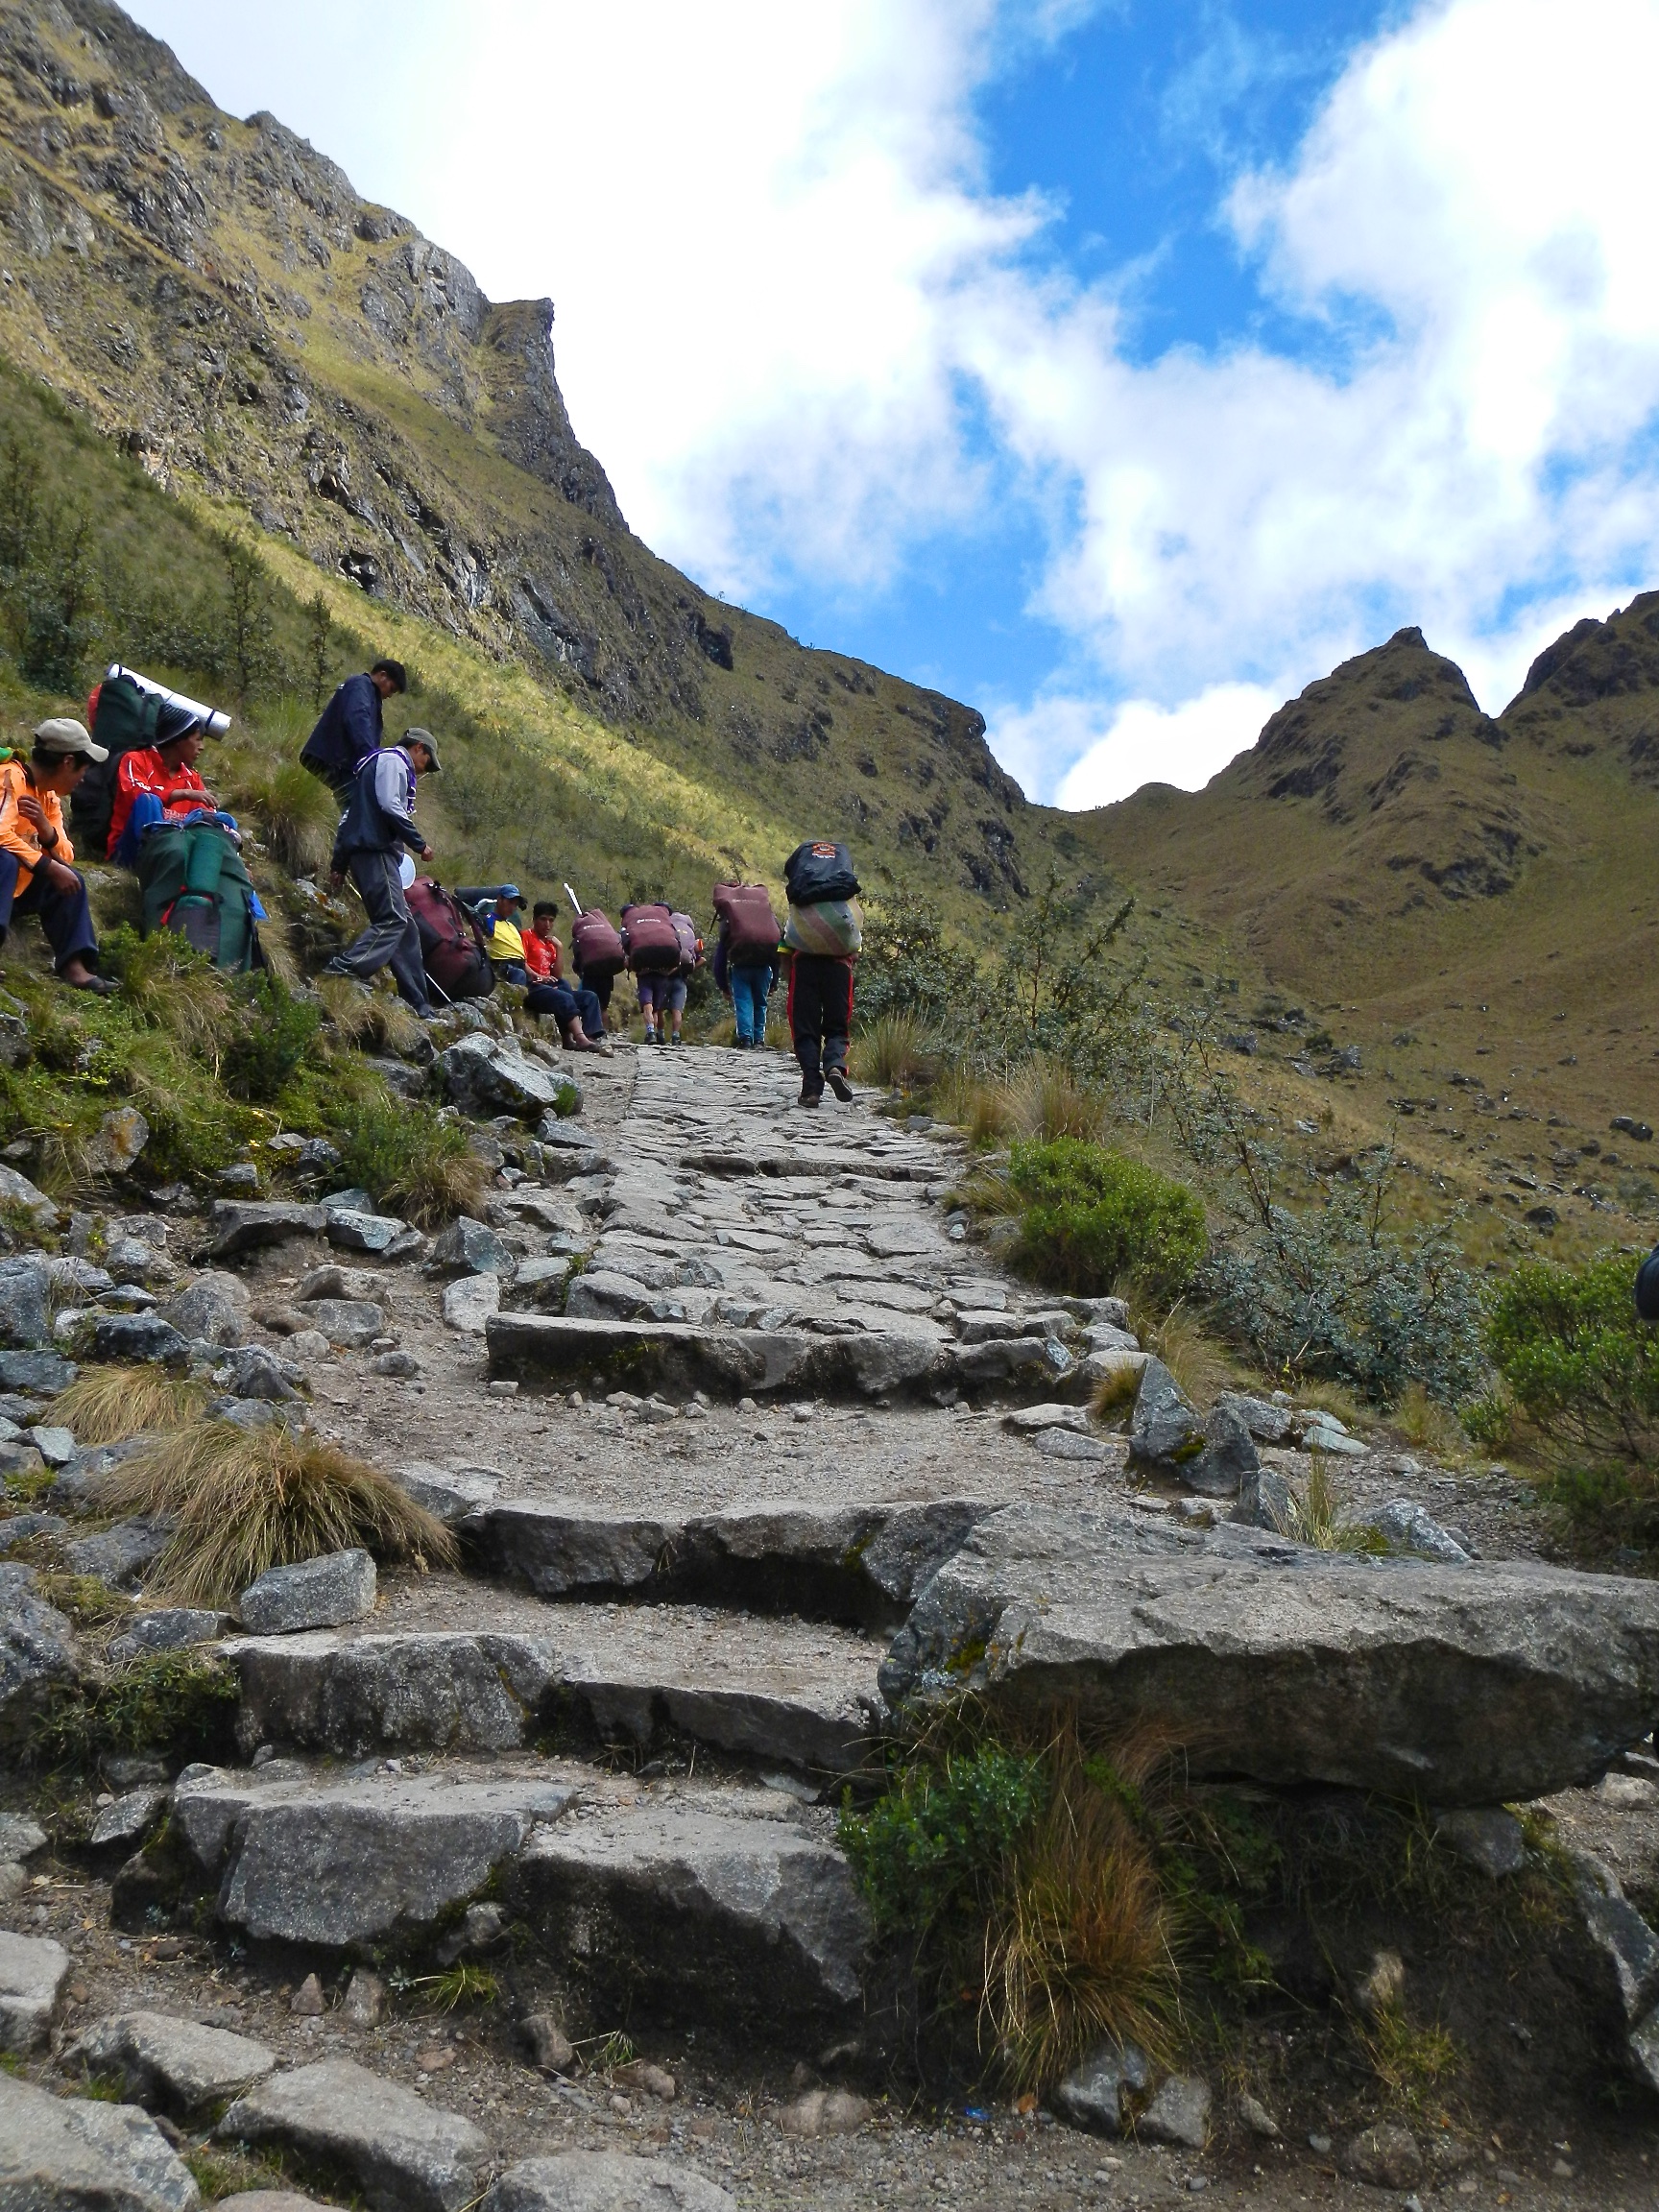  Porters climbing towards Dead Woman Pass, Inca Trail, Peru 